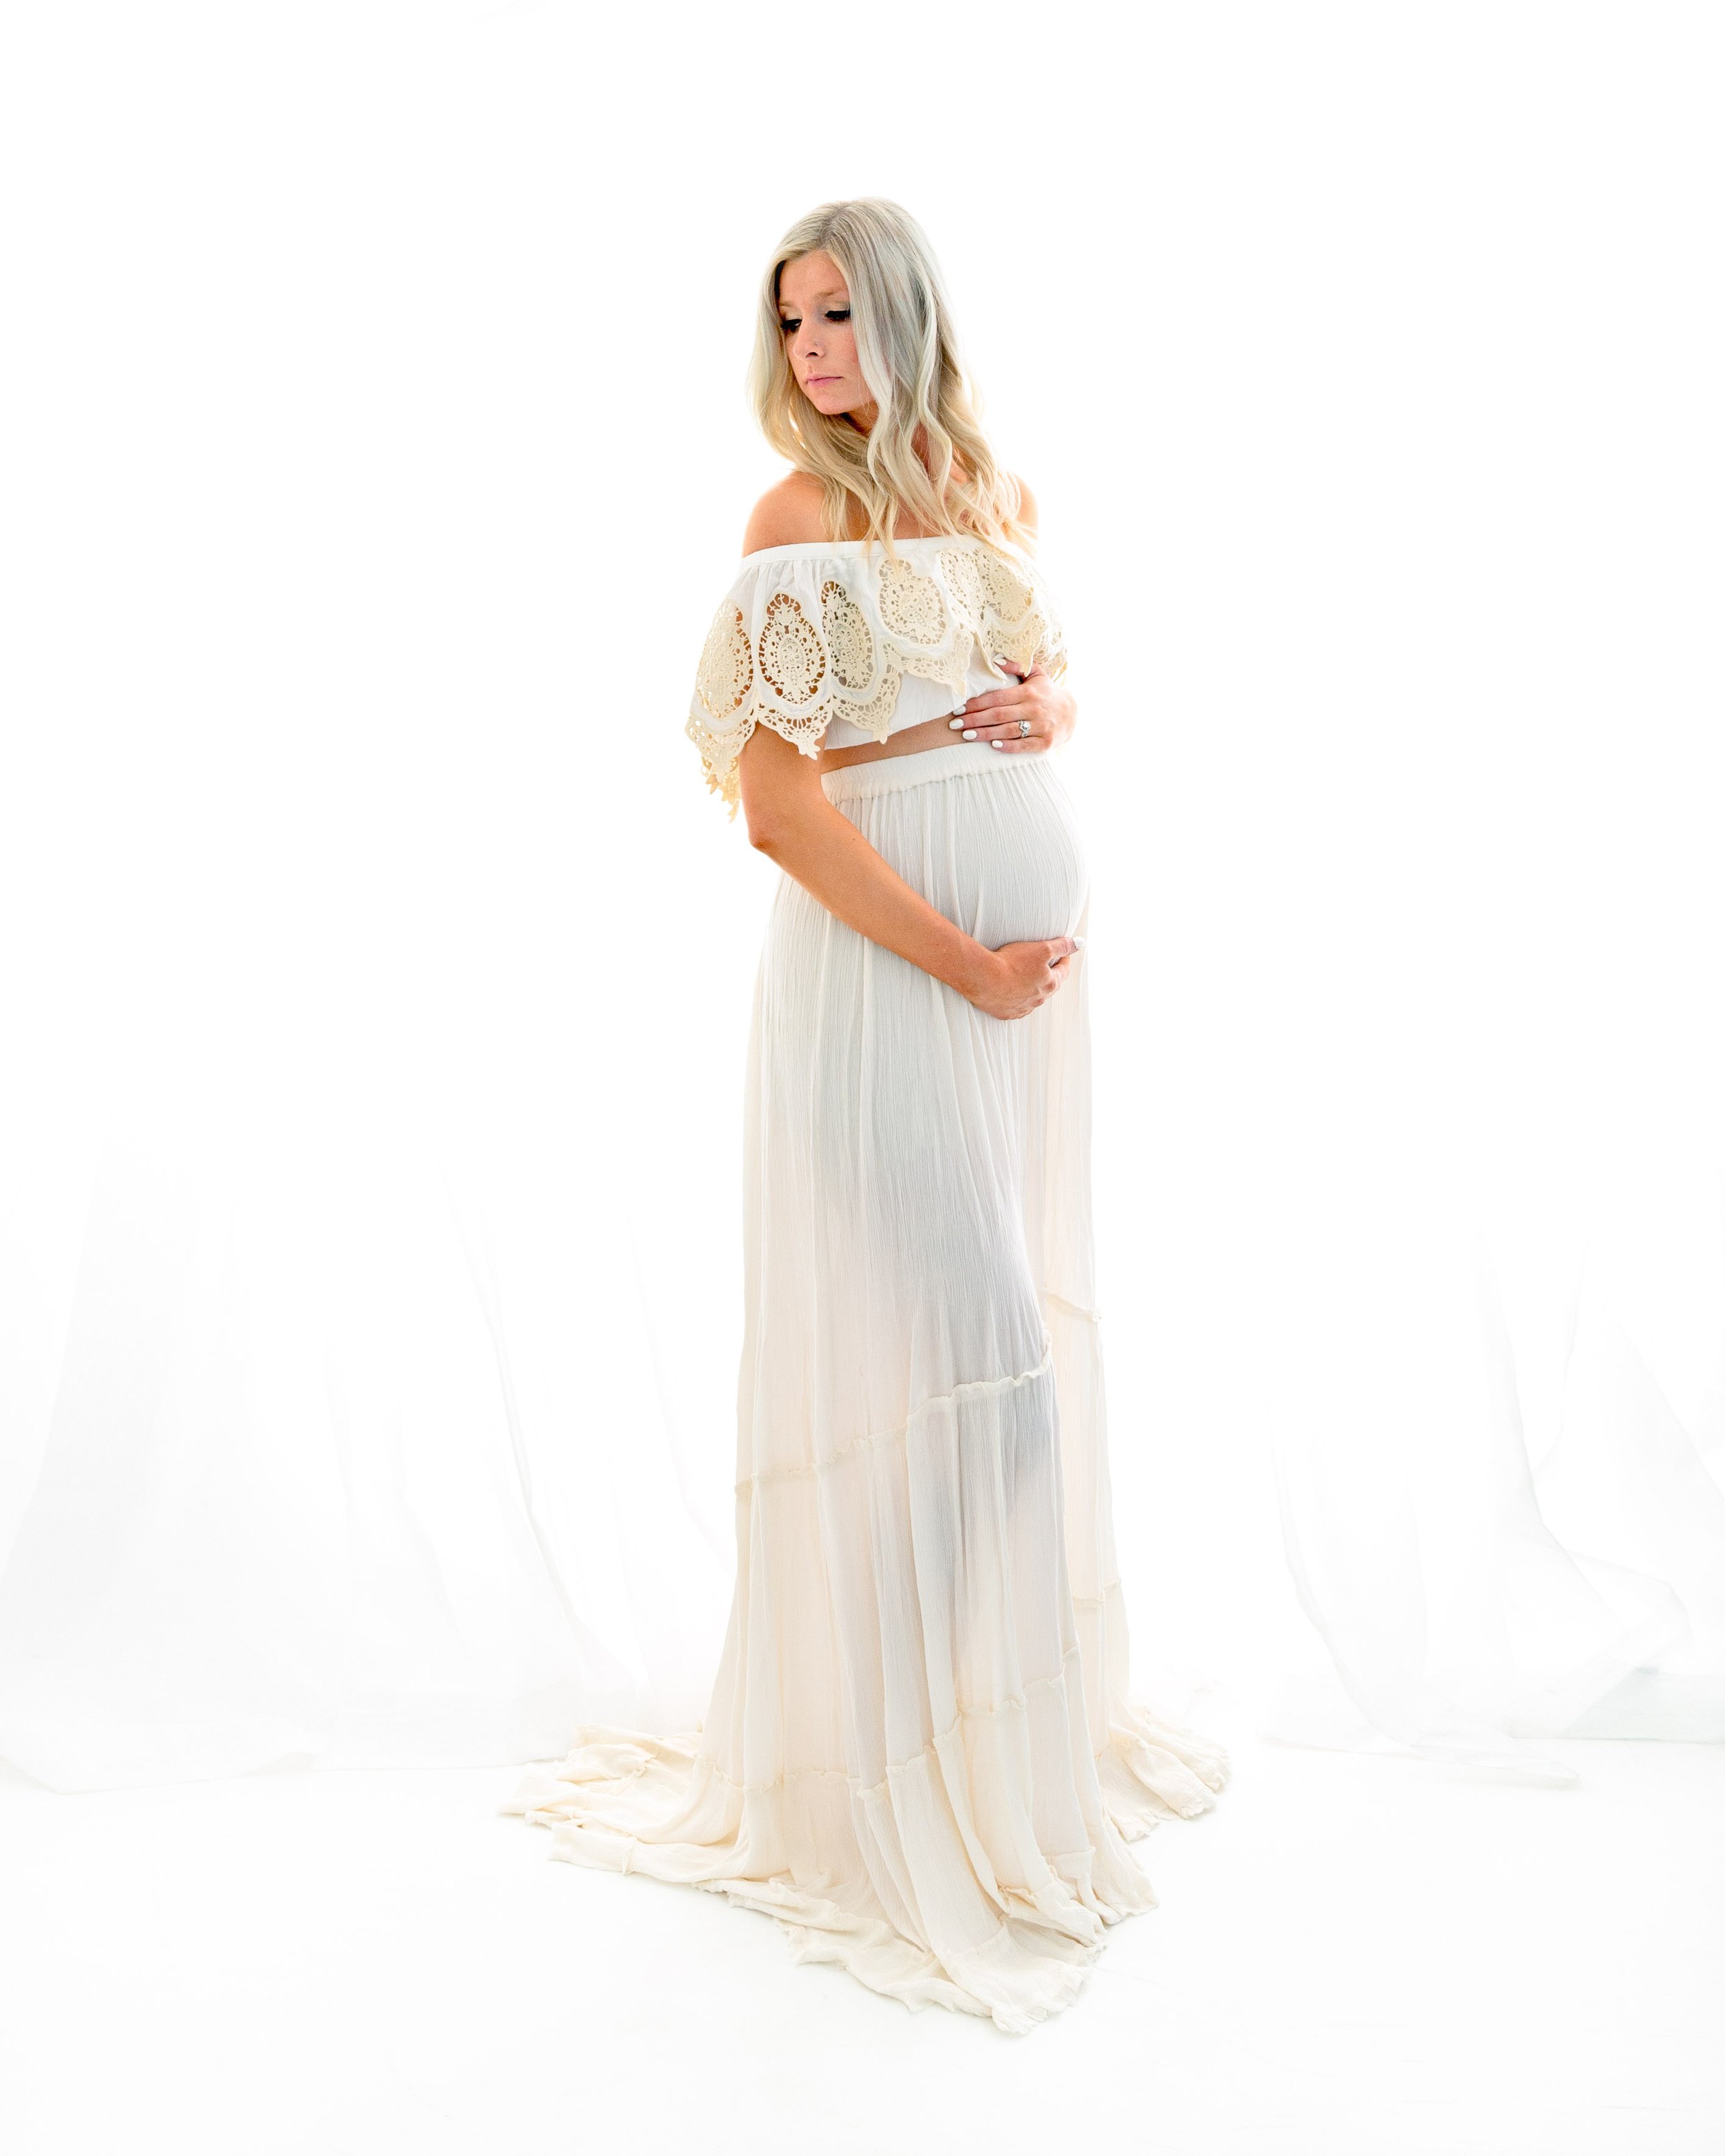 Baby-bump-photos-Maternity-photography-expecting-images-newborn-spokane-washington-2.jpg